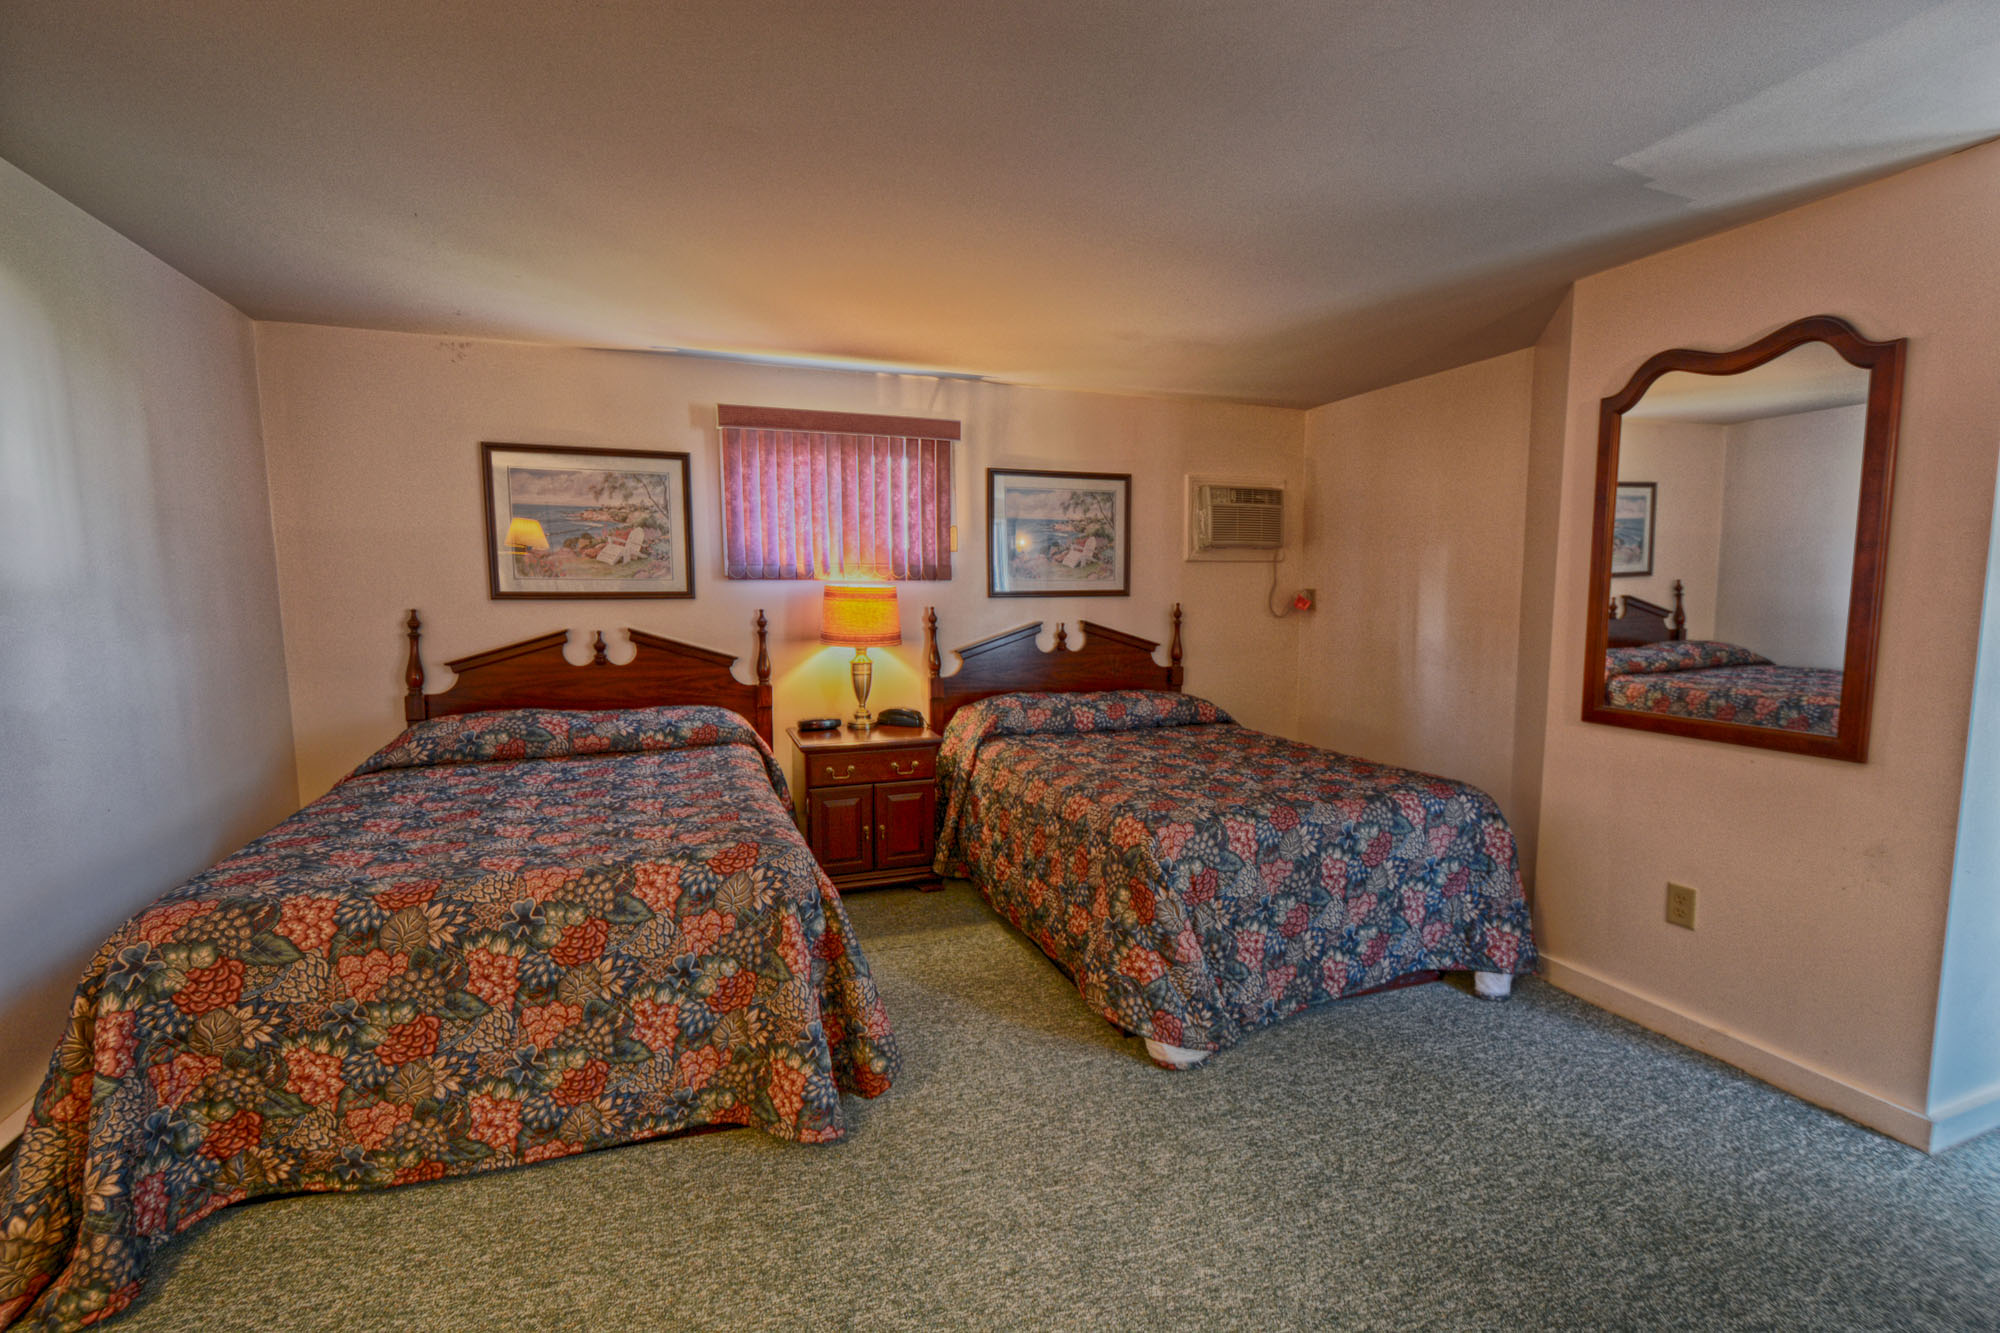 motel beds double rooms efficiencies each